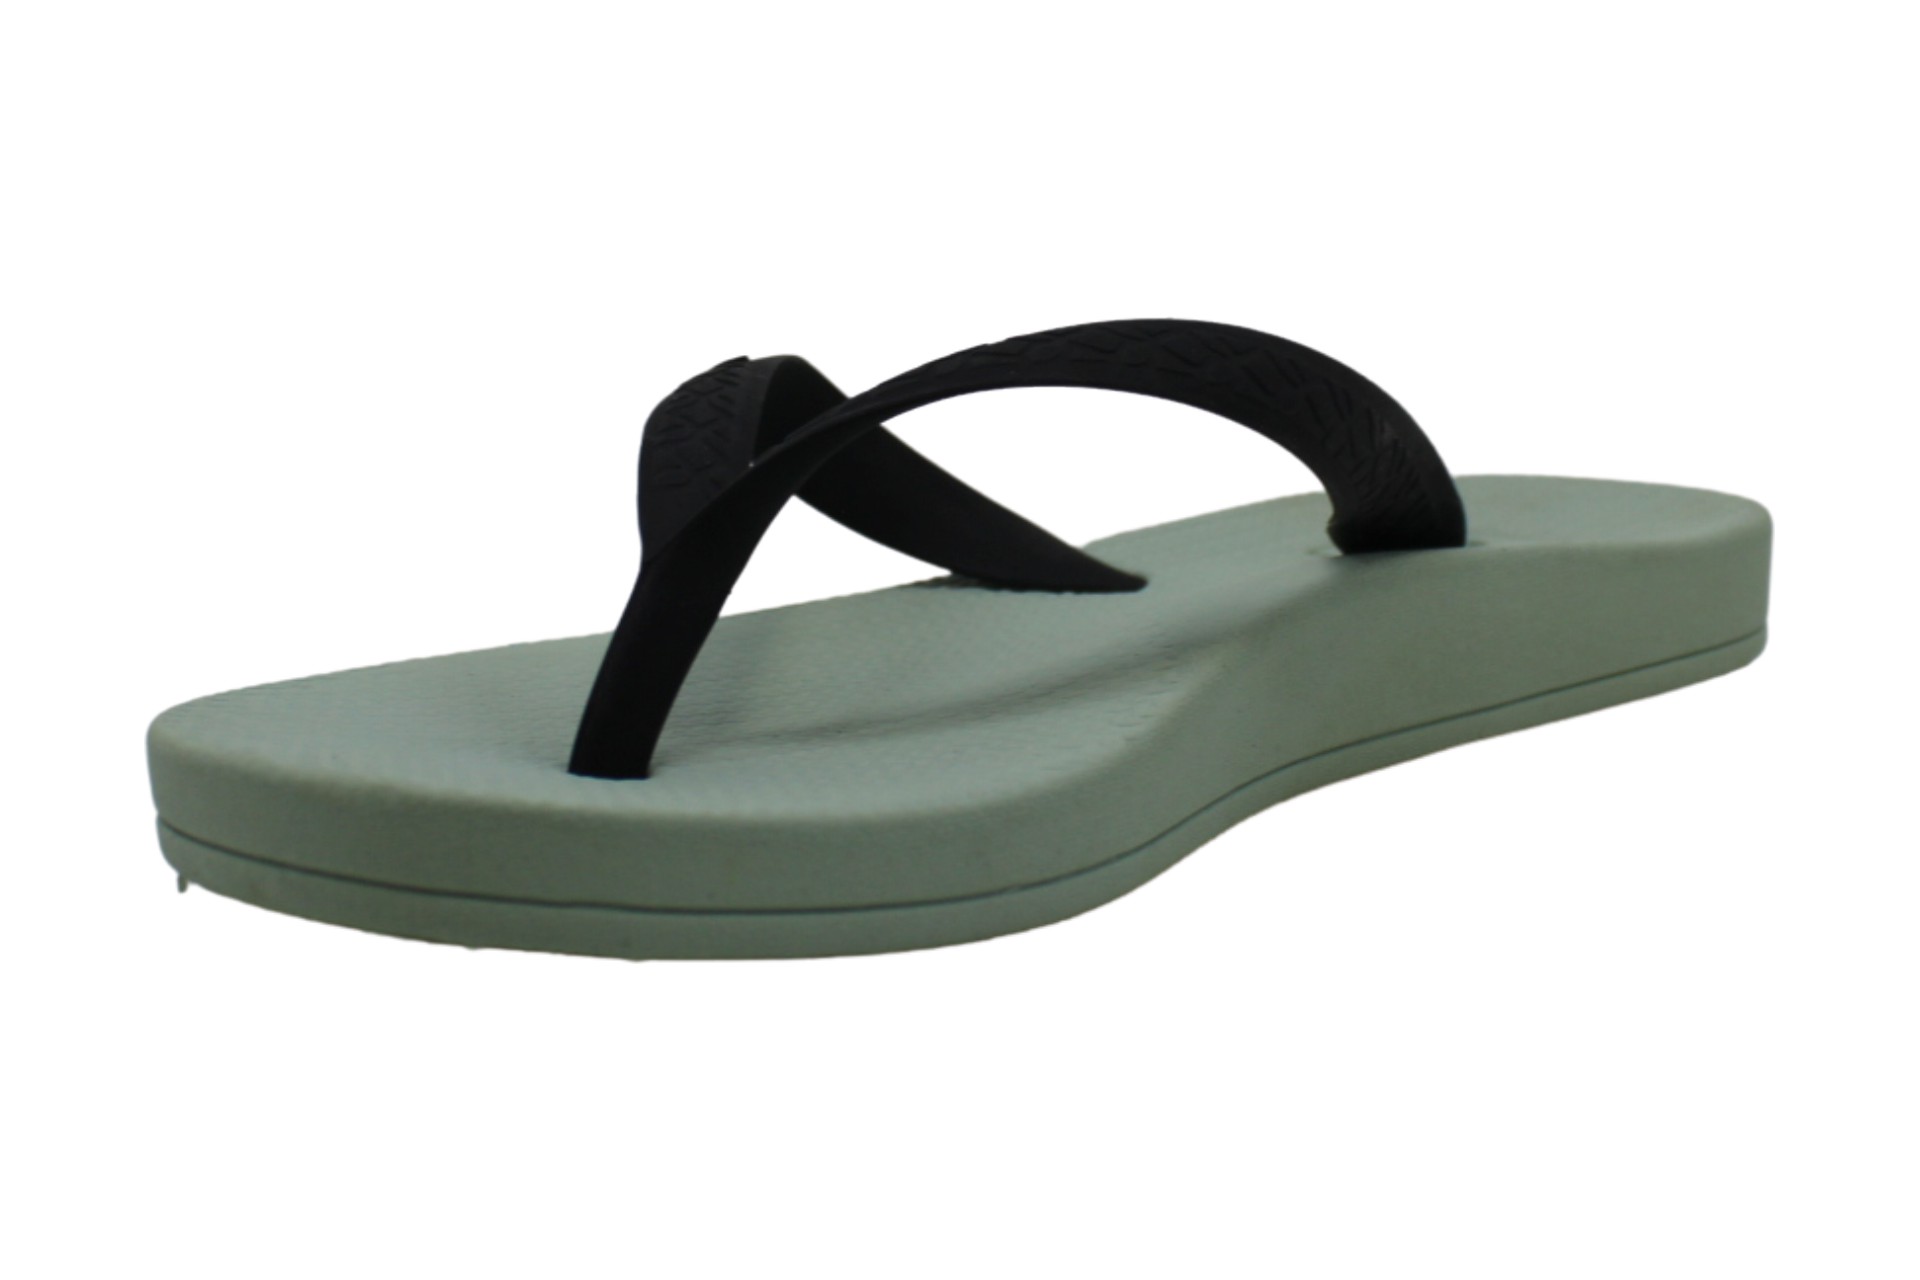 Womens Sandals Bolt Saltwater Stretch Reef Beach Aqua Shoes Black US Size 5